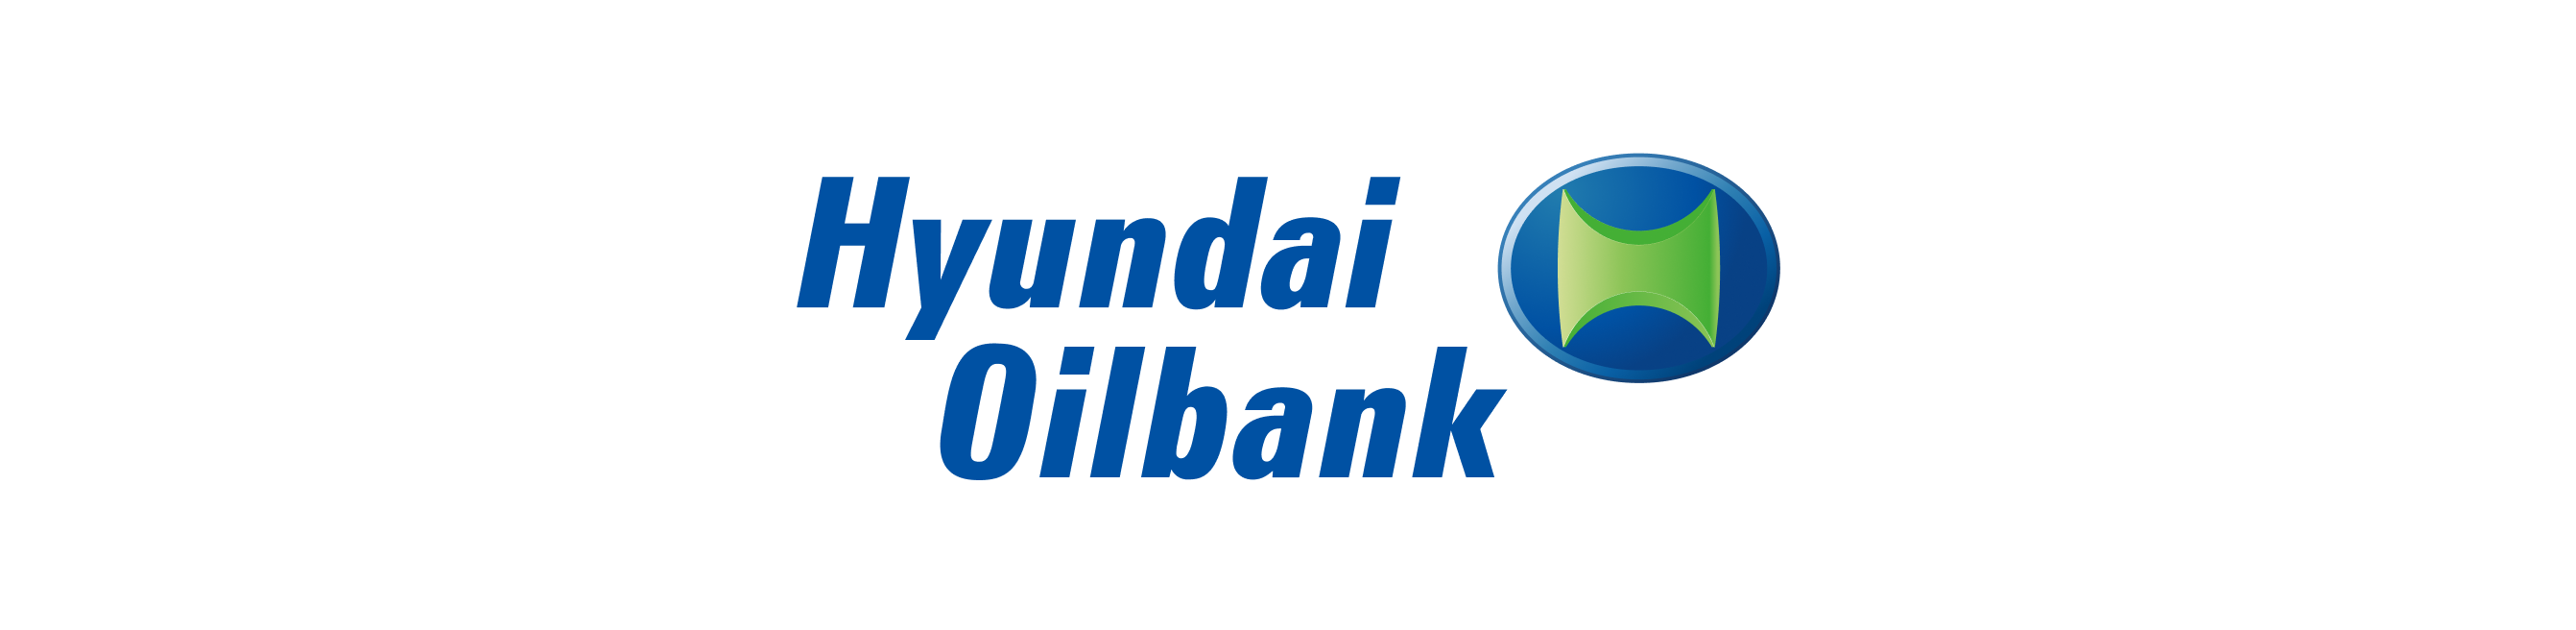 hyundai_oilbank